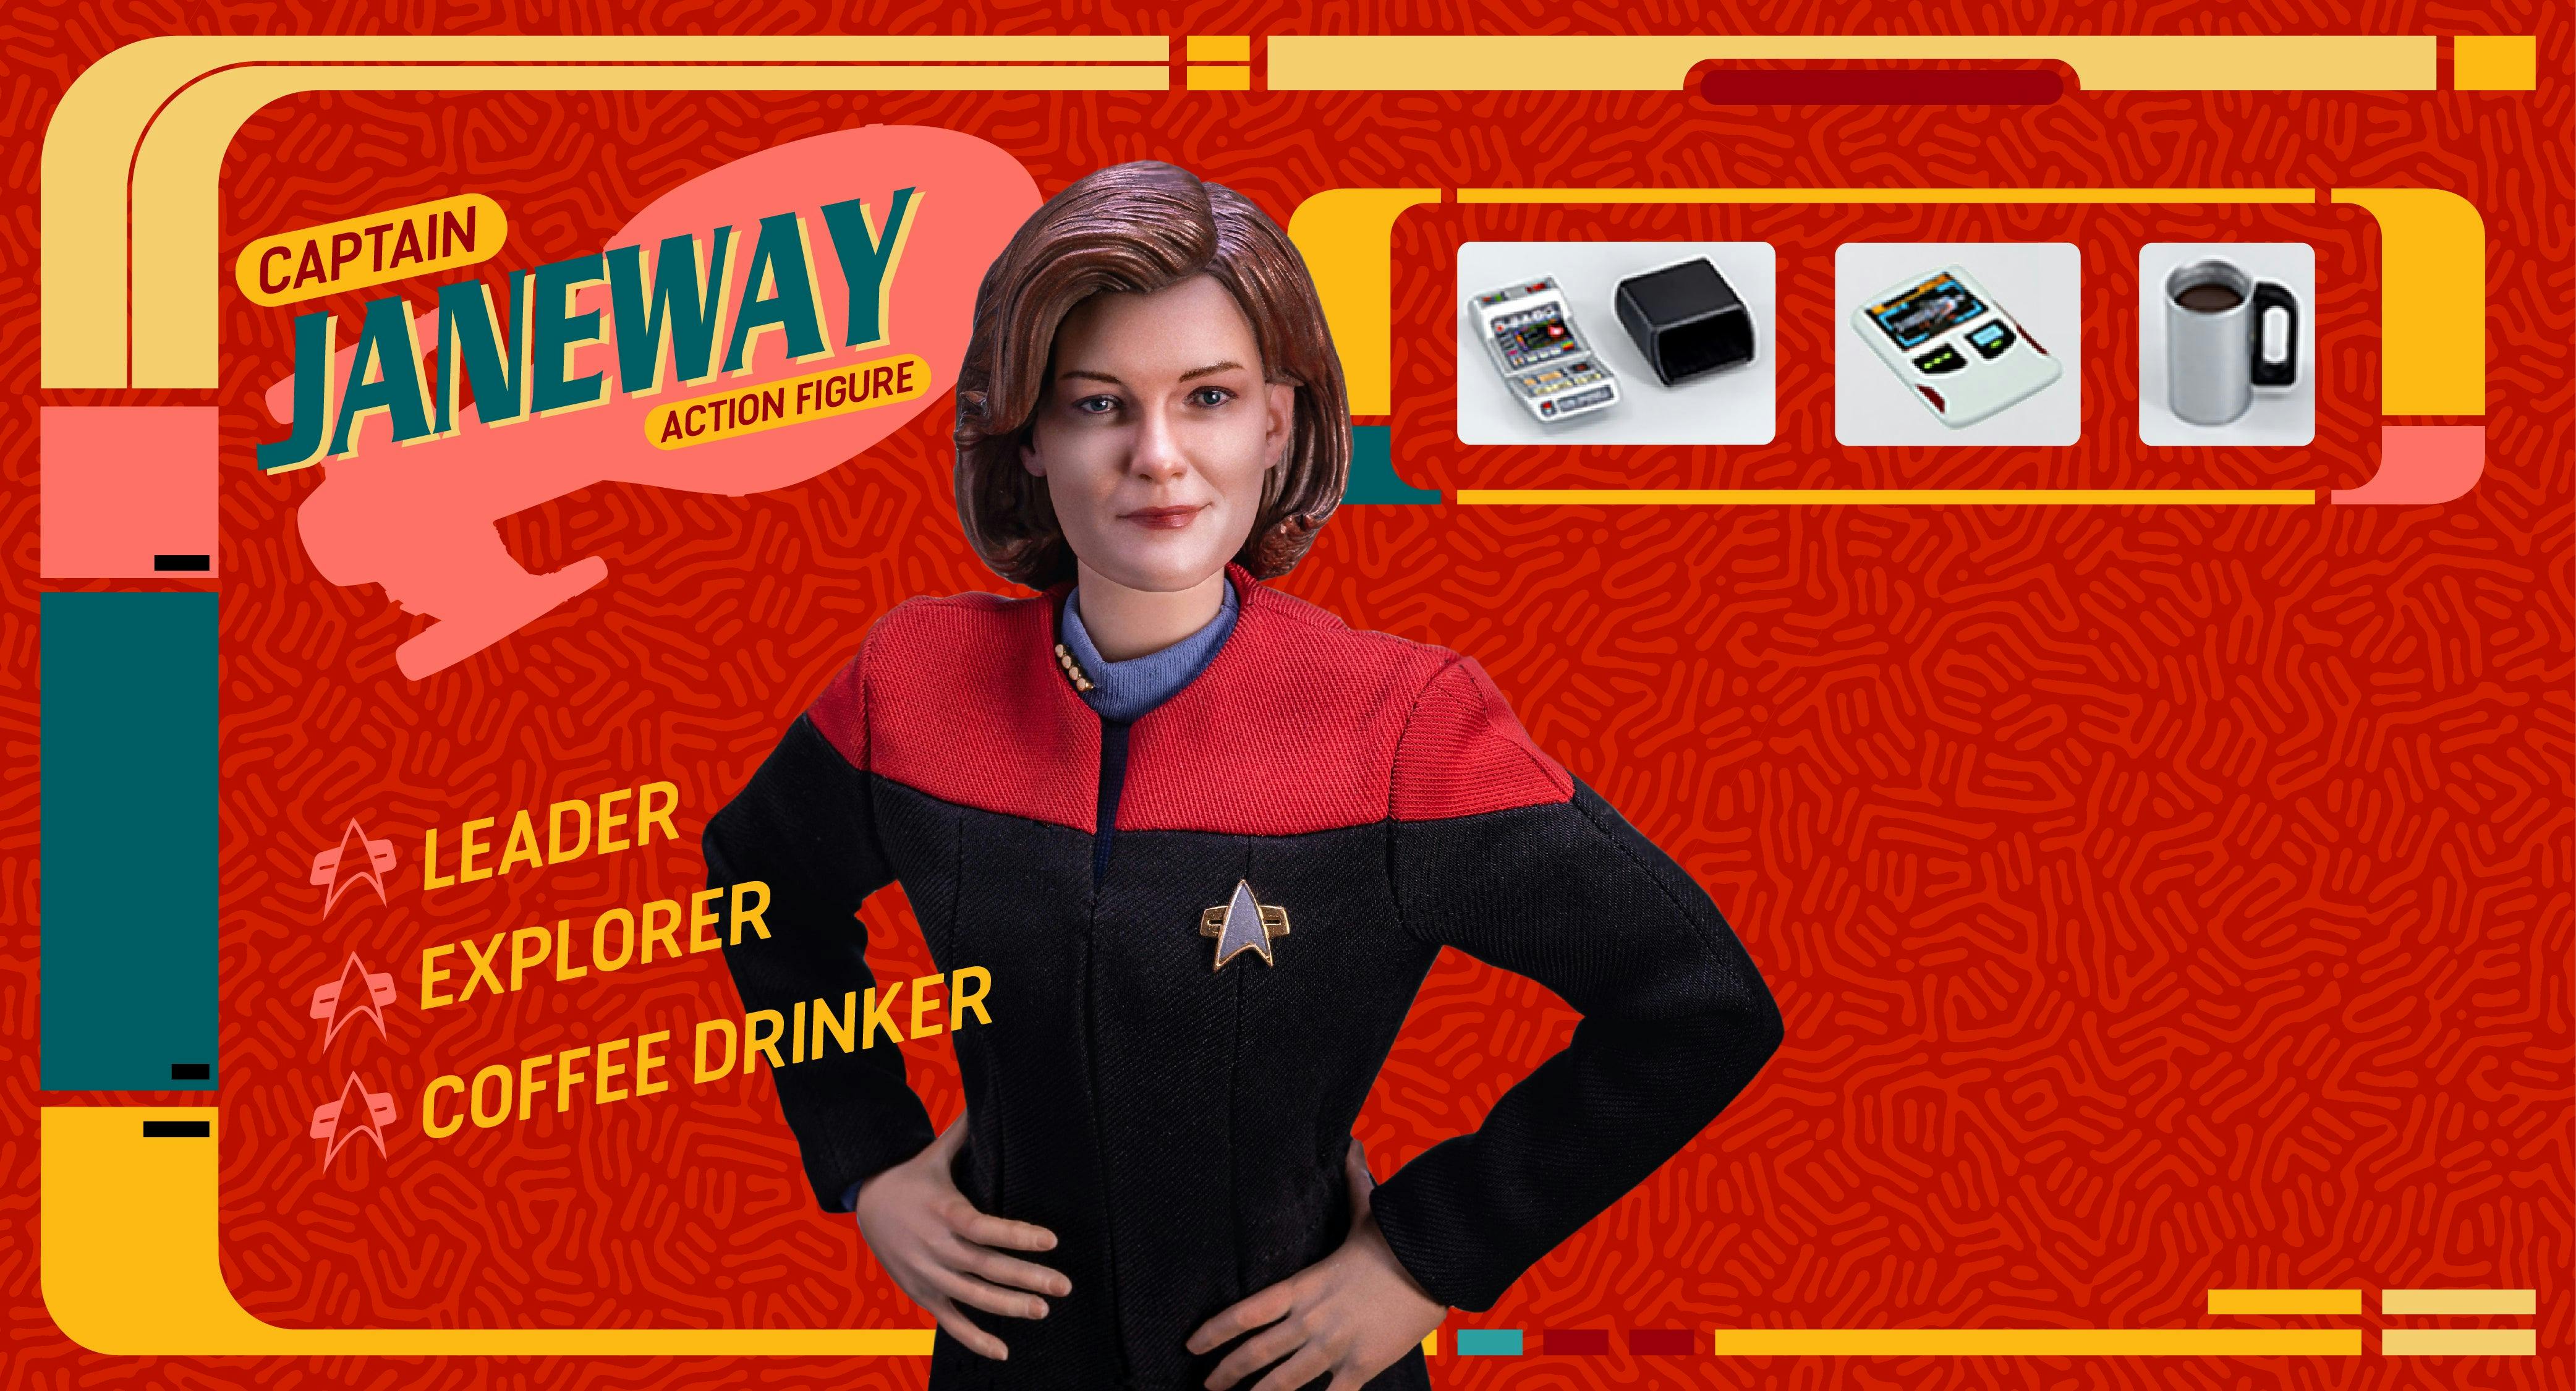 Star Trek: Voyager - Kate Mulgrew